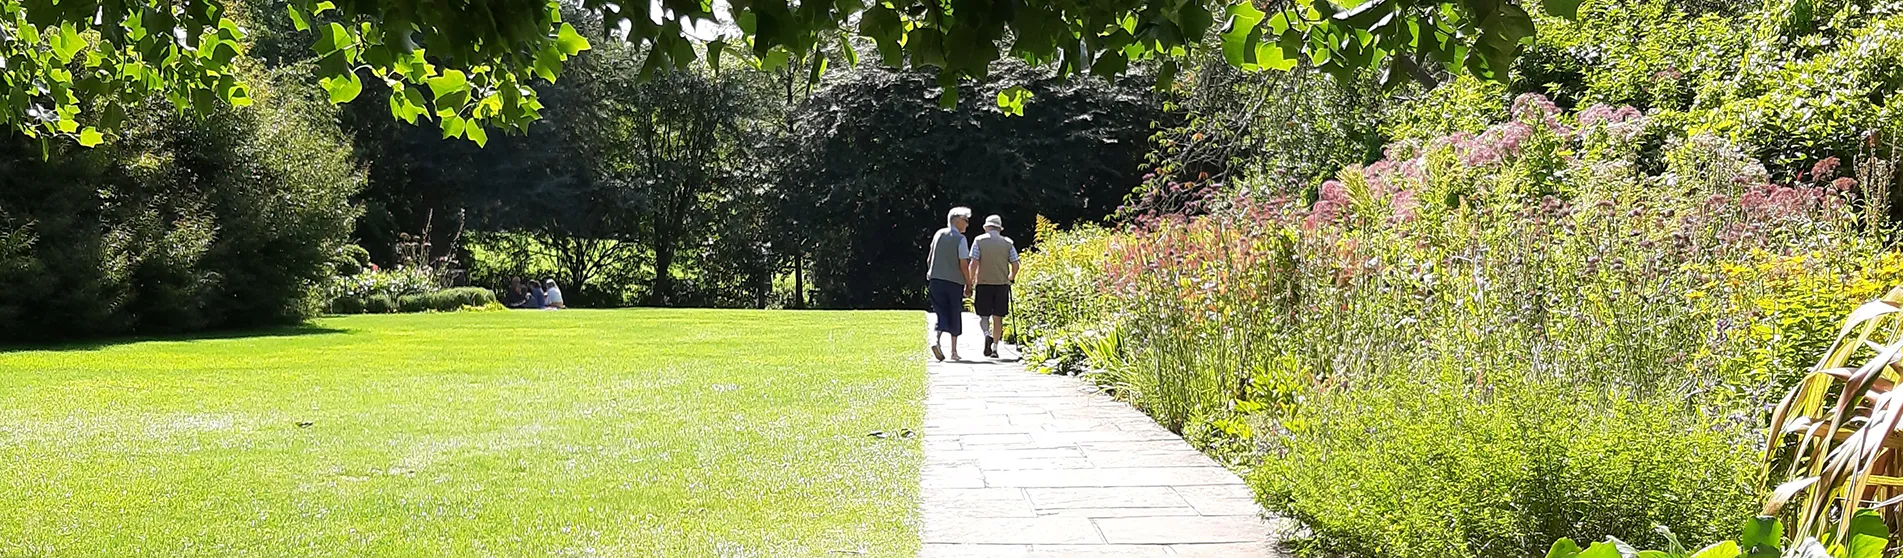 elderly couple walking in garden